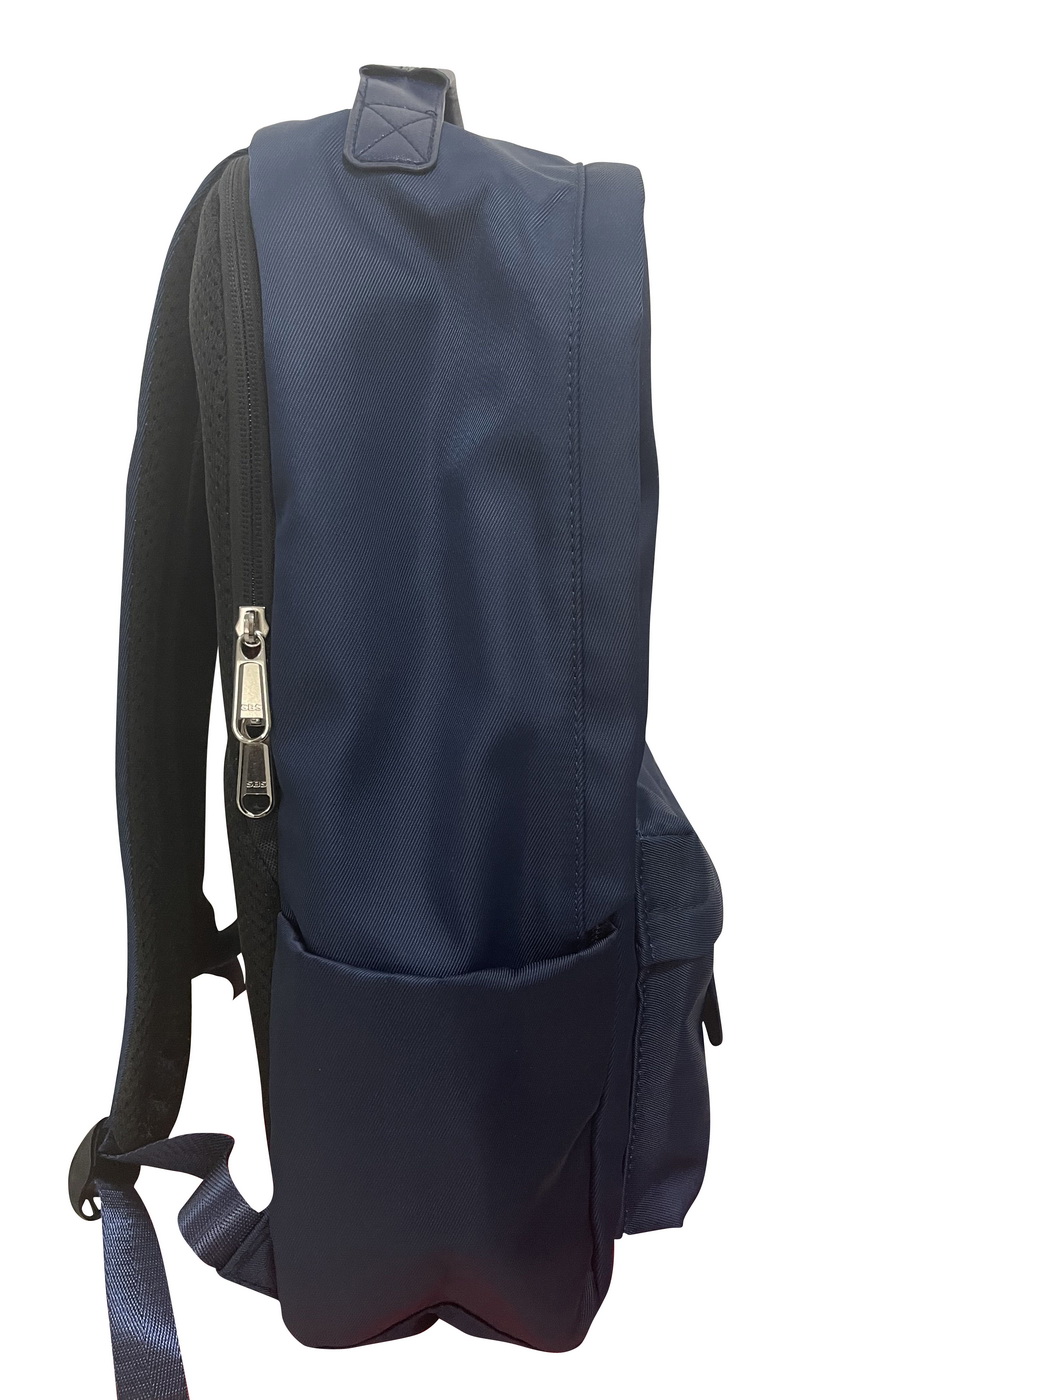 WADIRUM Waterproof Roomy Fashion Backpack for Teen Girl